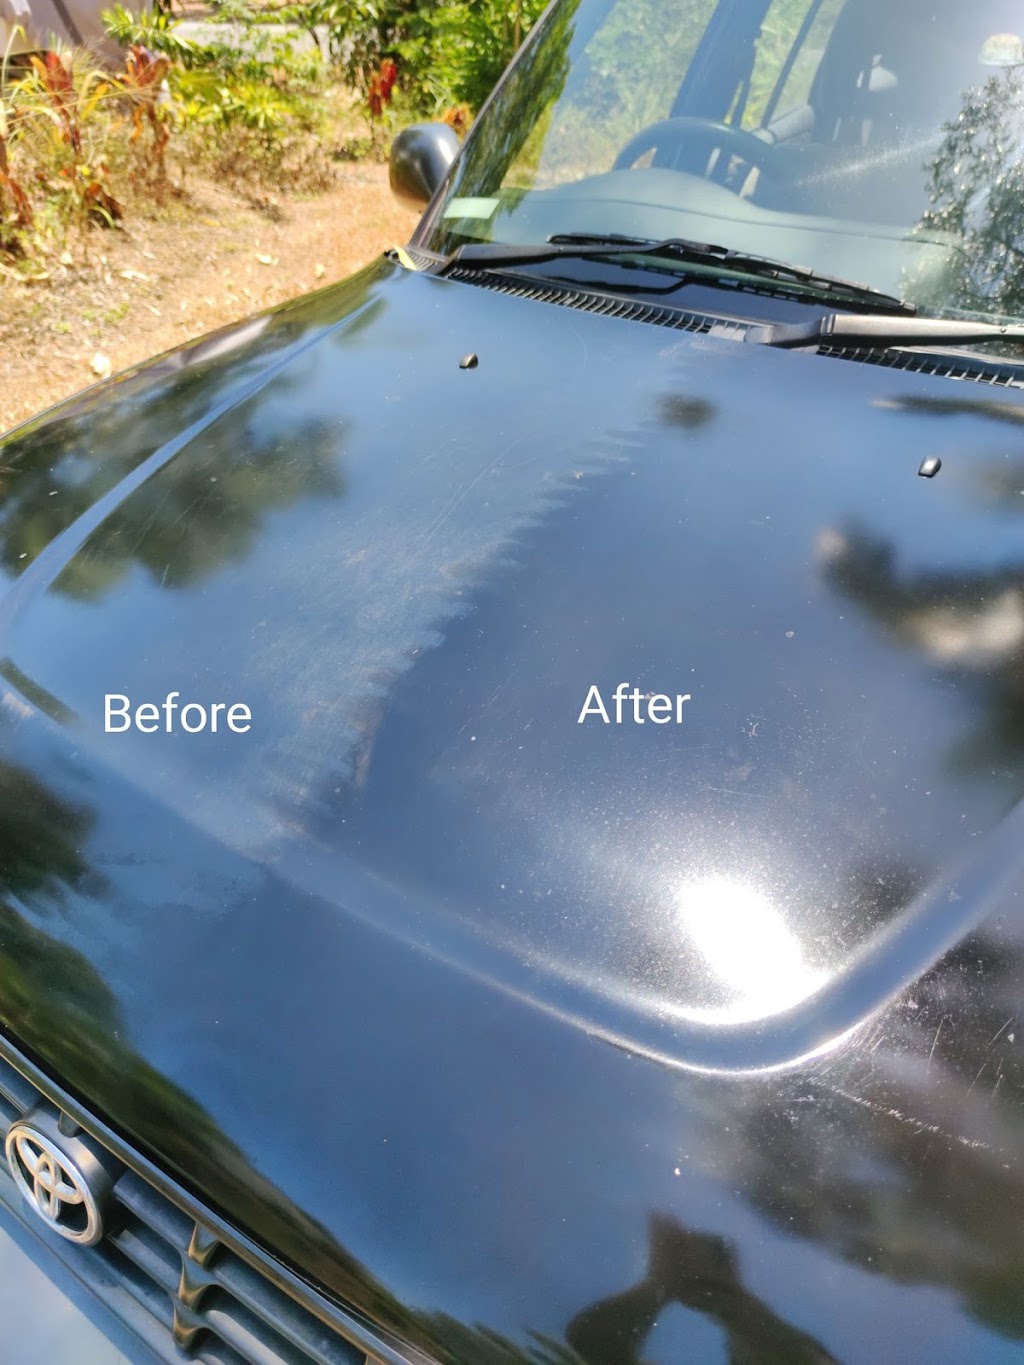 Mission Squeaky Clean - Car Detailing | car wash | 6 Koda St, Wongaling Beach QLD 4852, Australia | 0491092249 OR +61 491 092 249